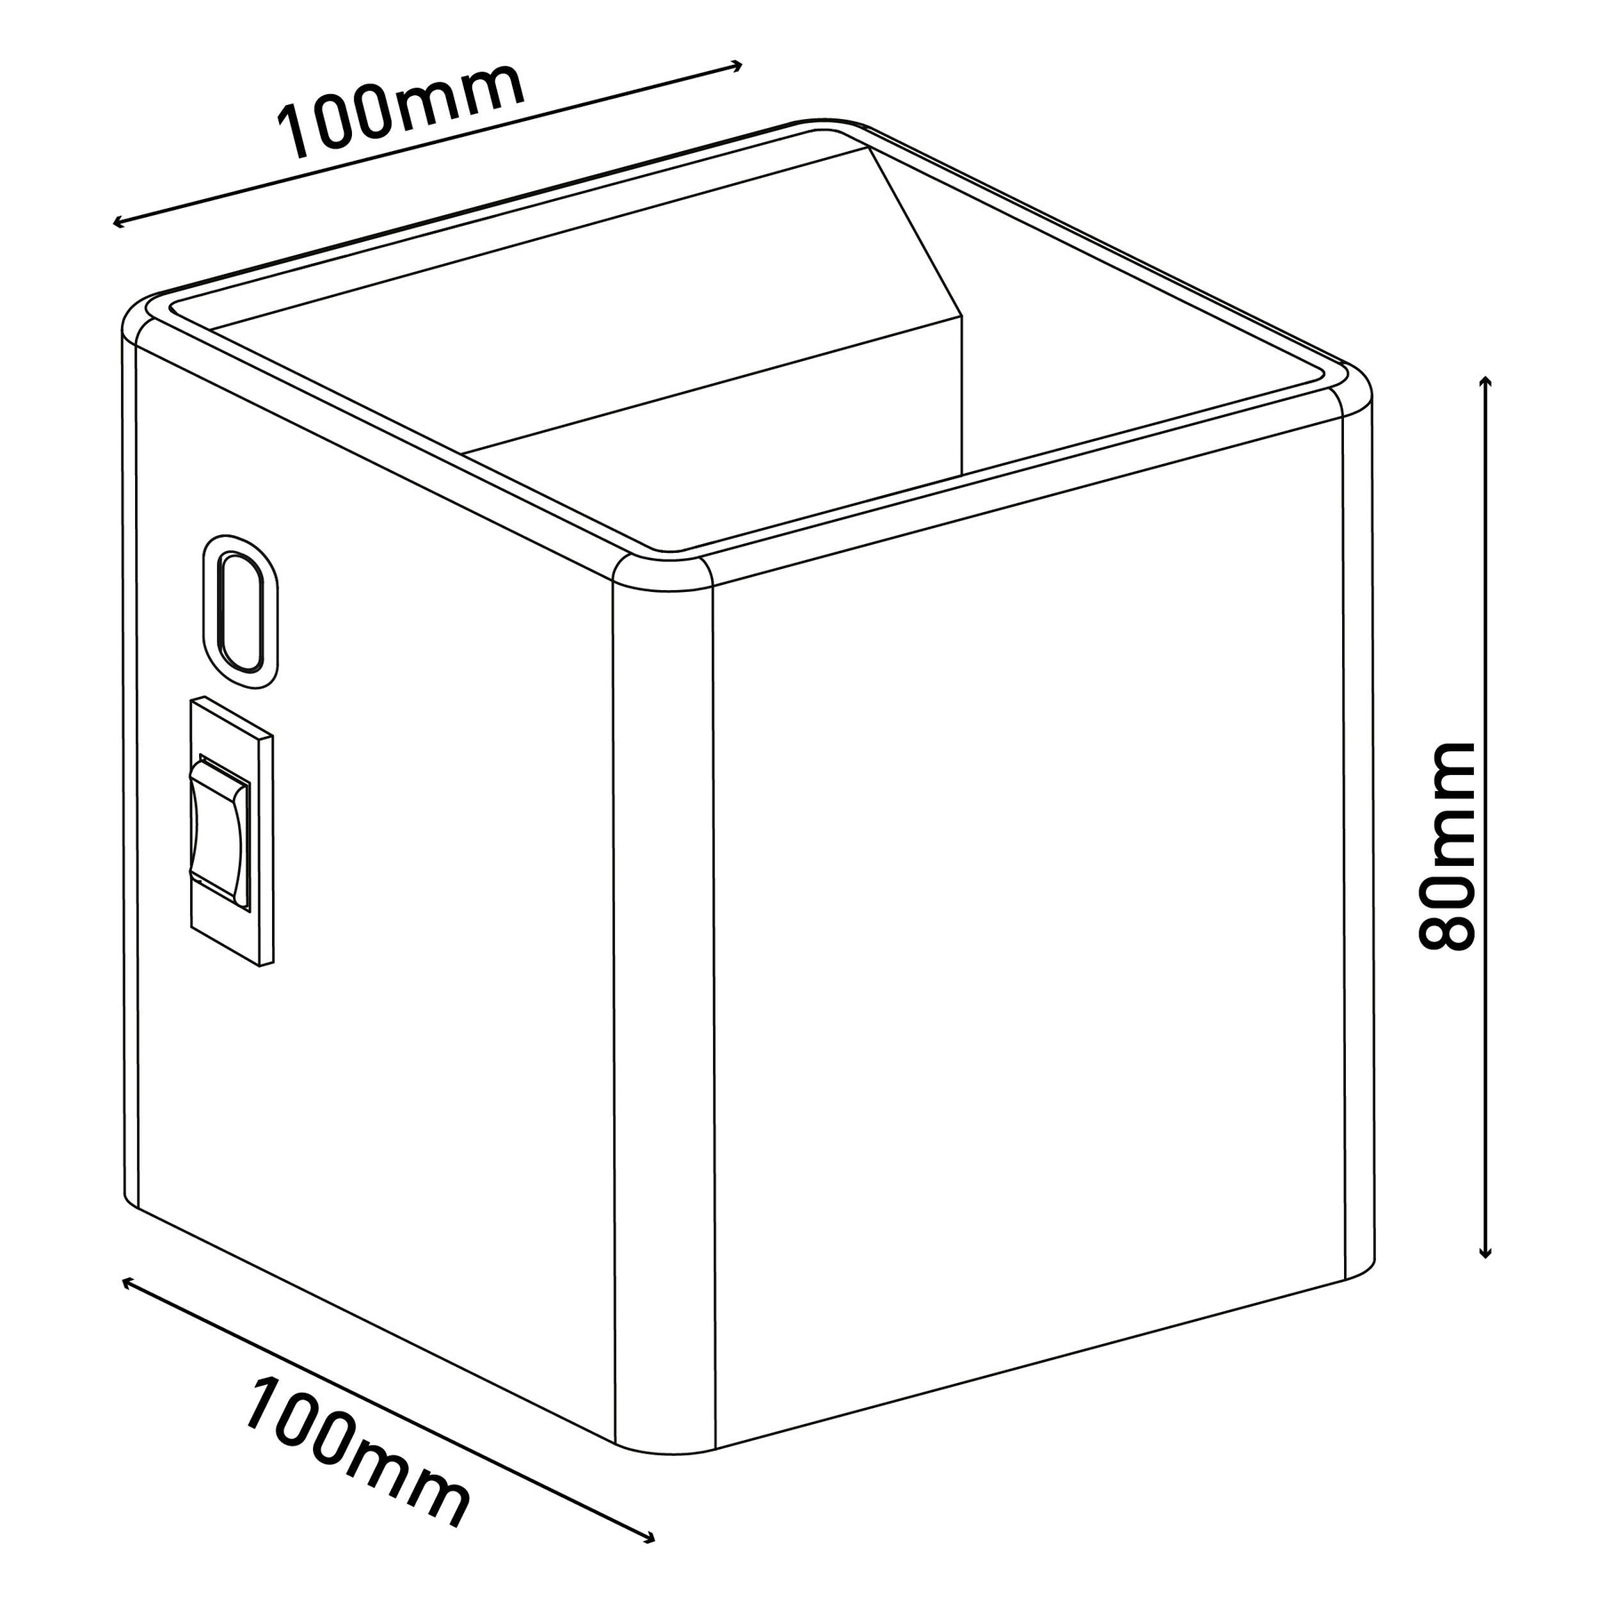 Cube LED wall light battery, magnetic, white